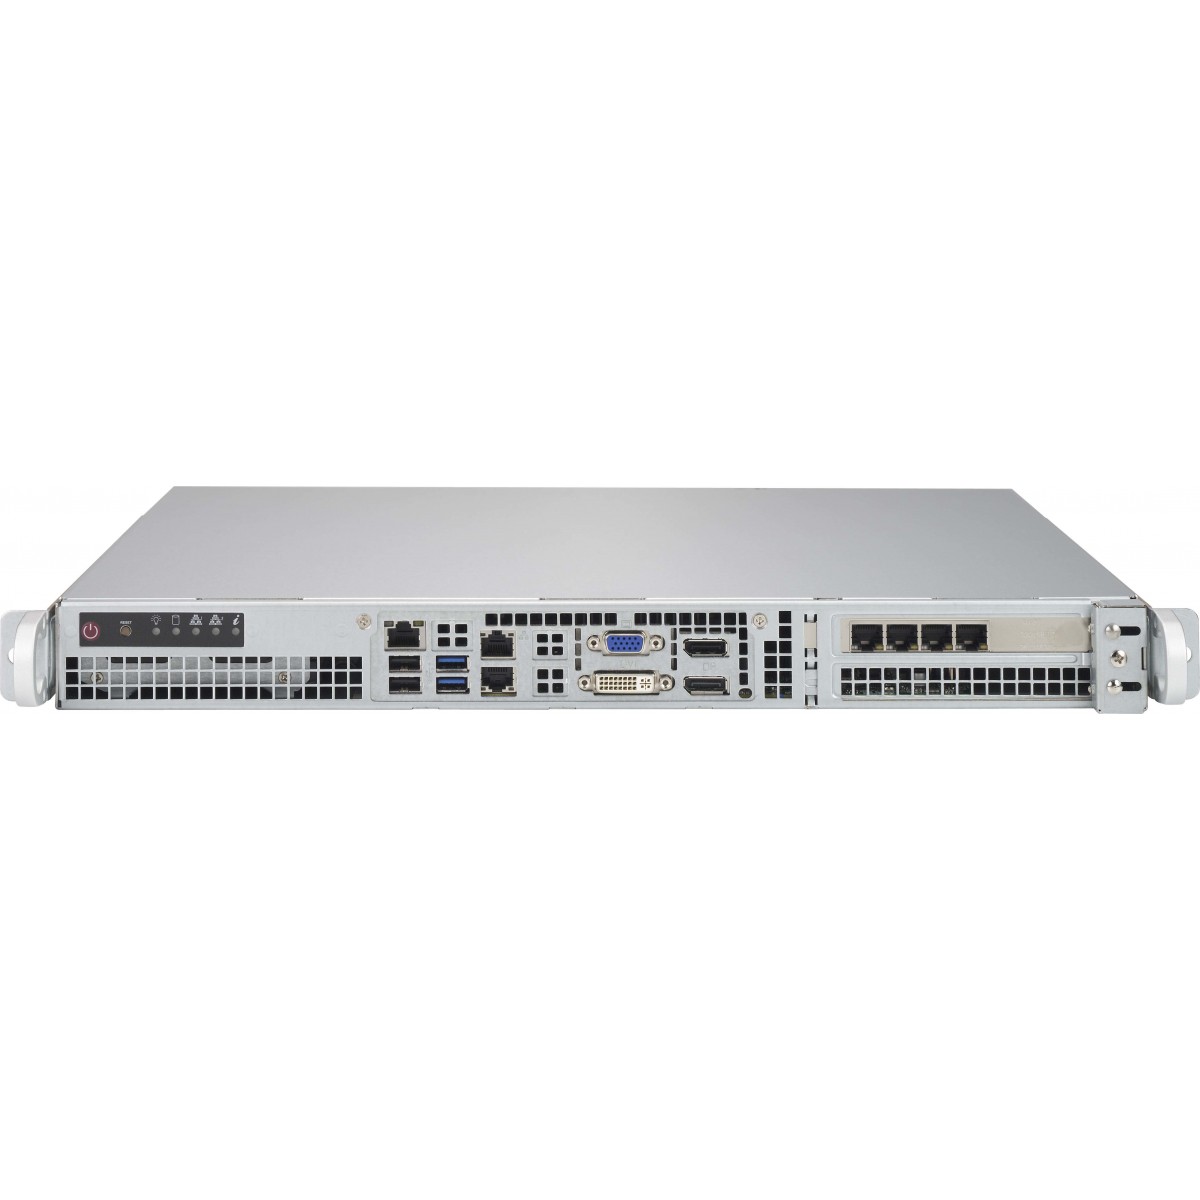 Supermicro CSE-515-R407 - Rack - Server - Silver - Fan fail - HDD - LAN - Power - System - Platinum Level Certified USA - UL lis